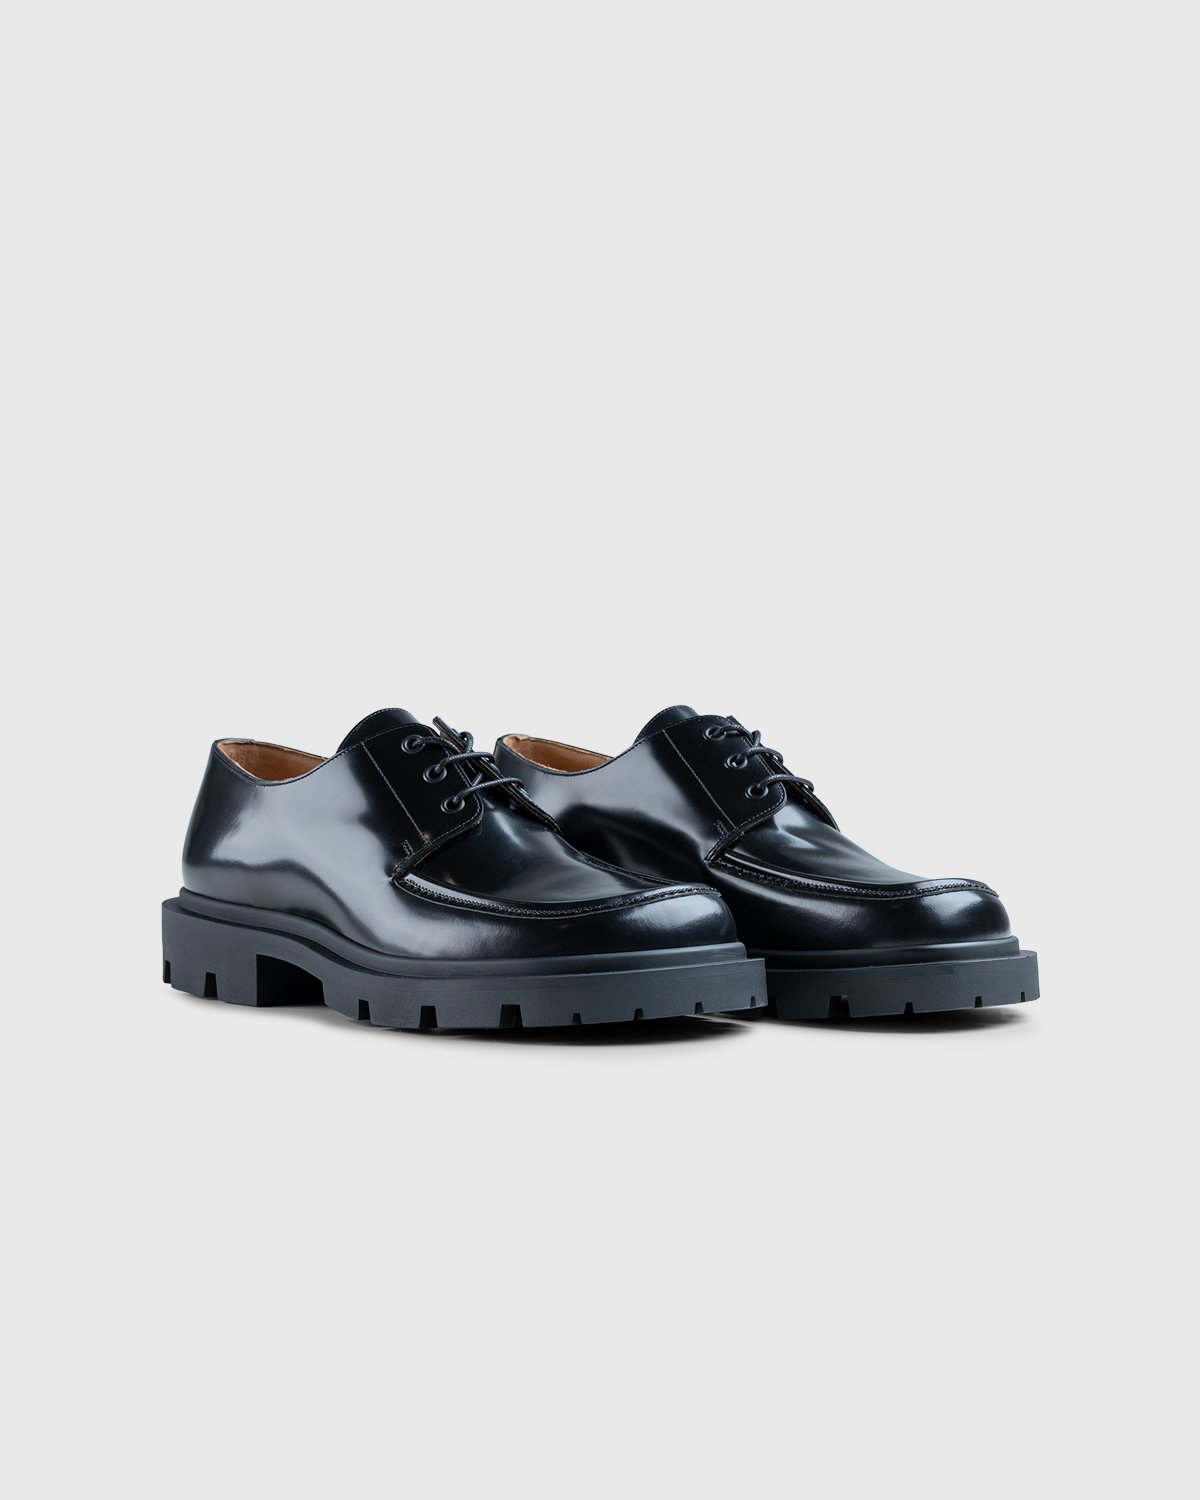 Maison Margiela - Cleated Sole Shoes Black - Footwear - Black - Image 2